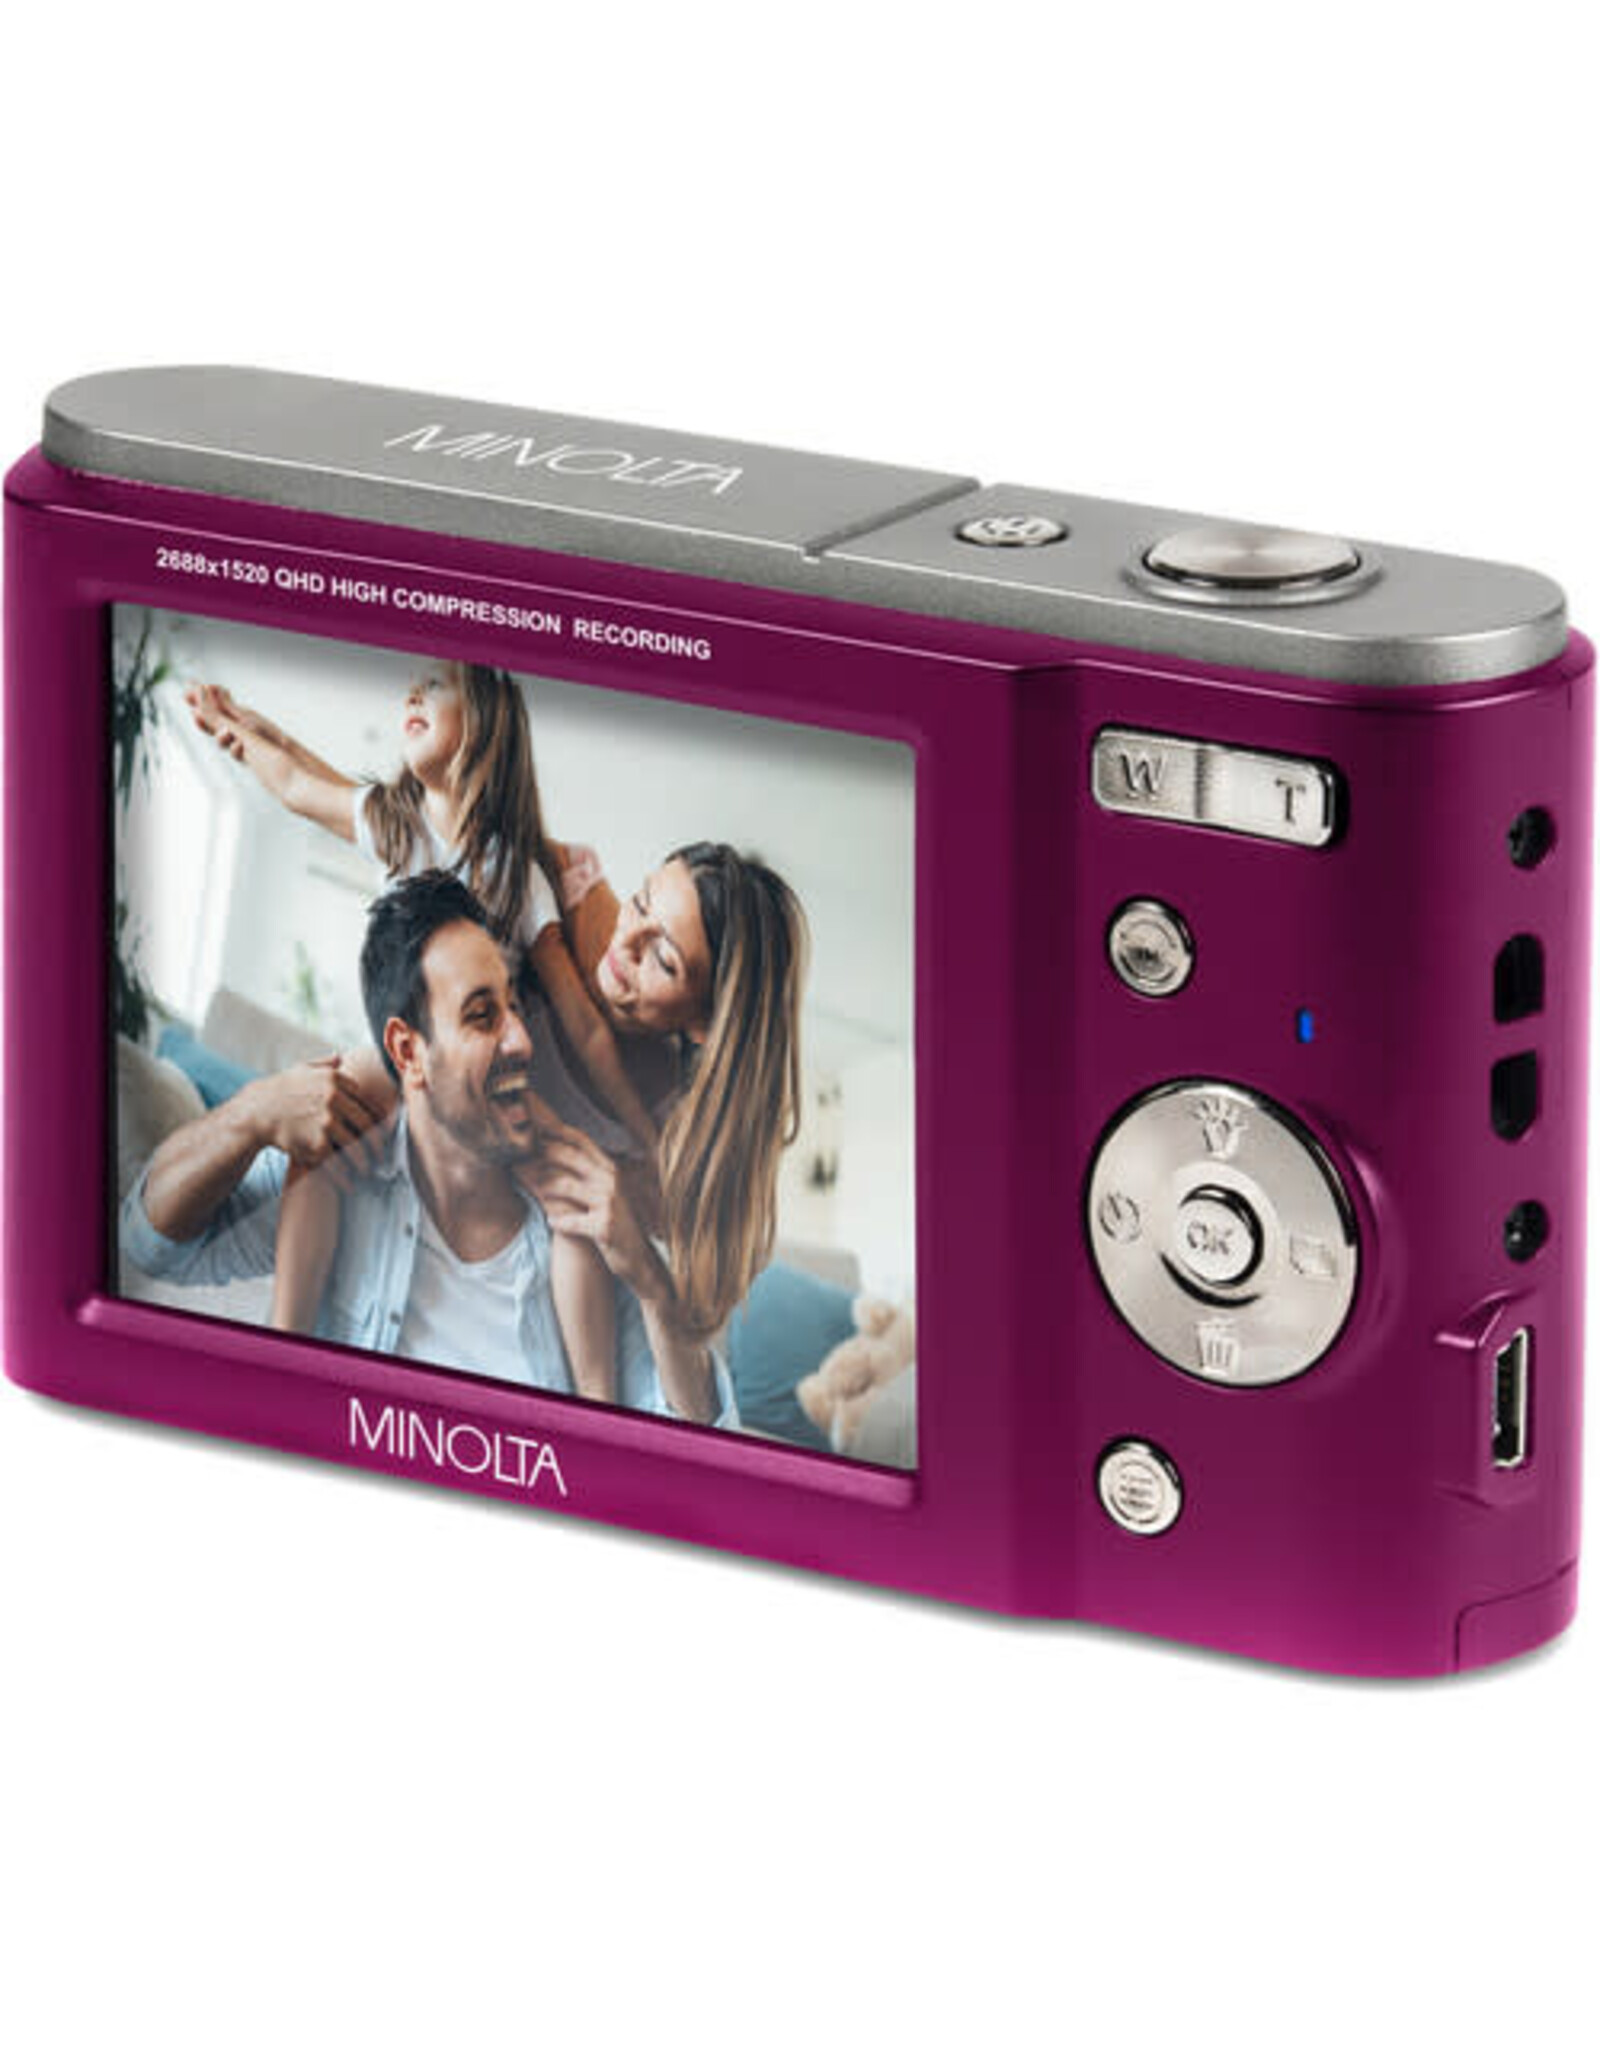 Konica Minolta Minolta MND20 Digital Camera (Magenta)